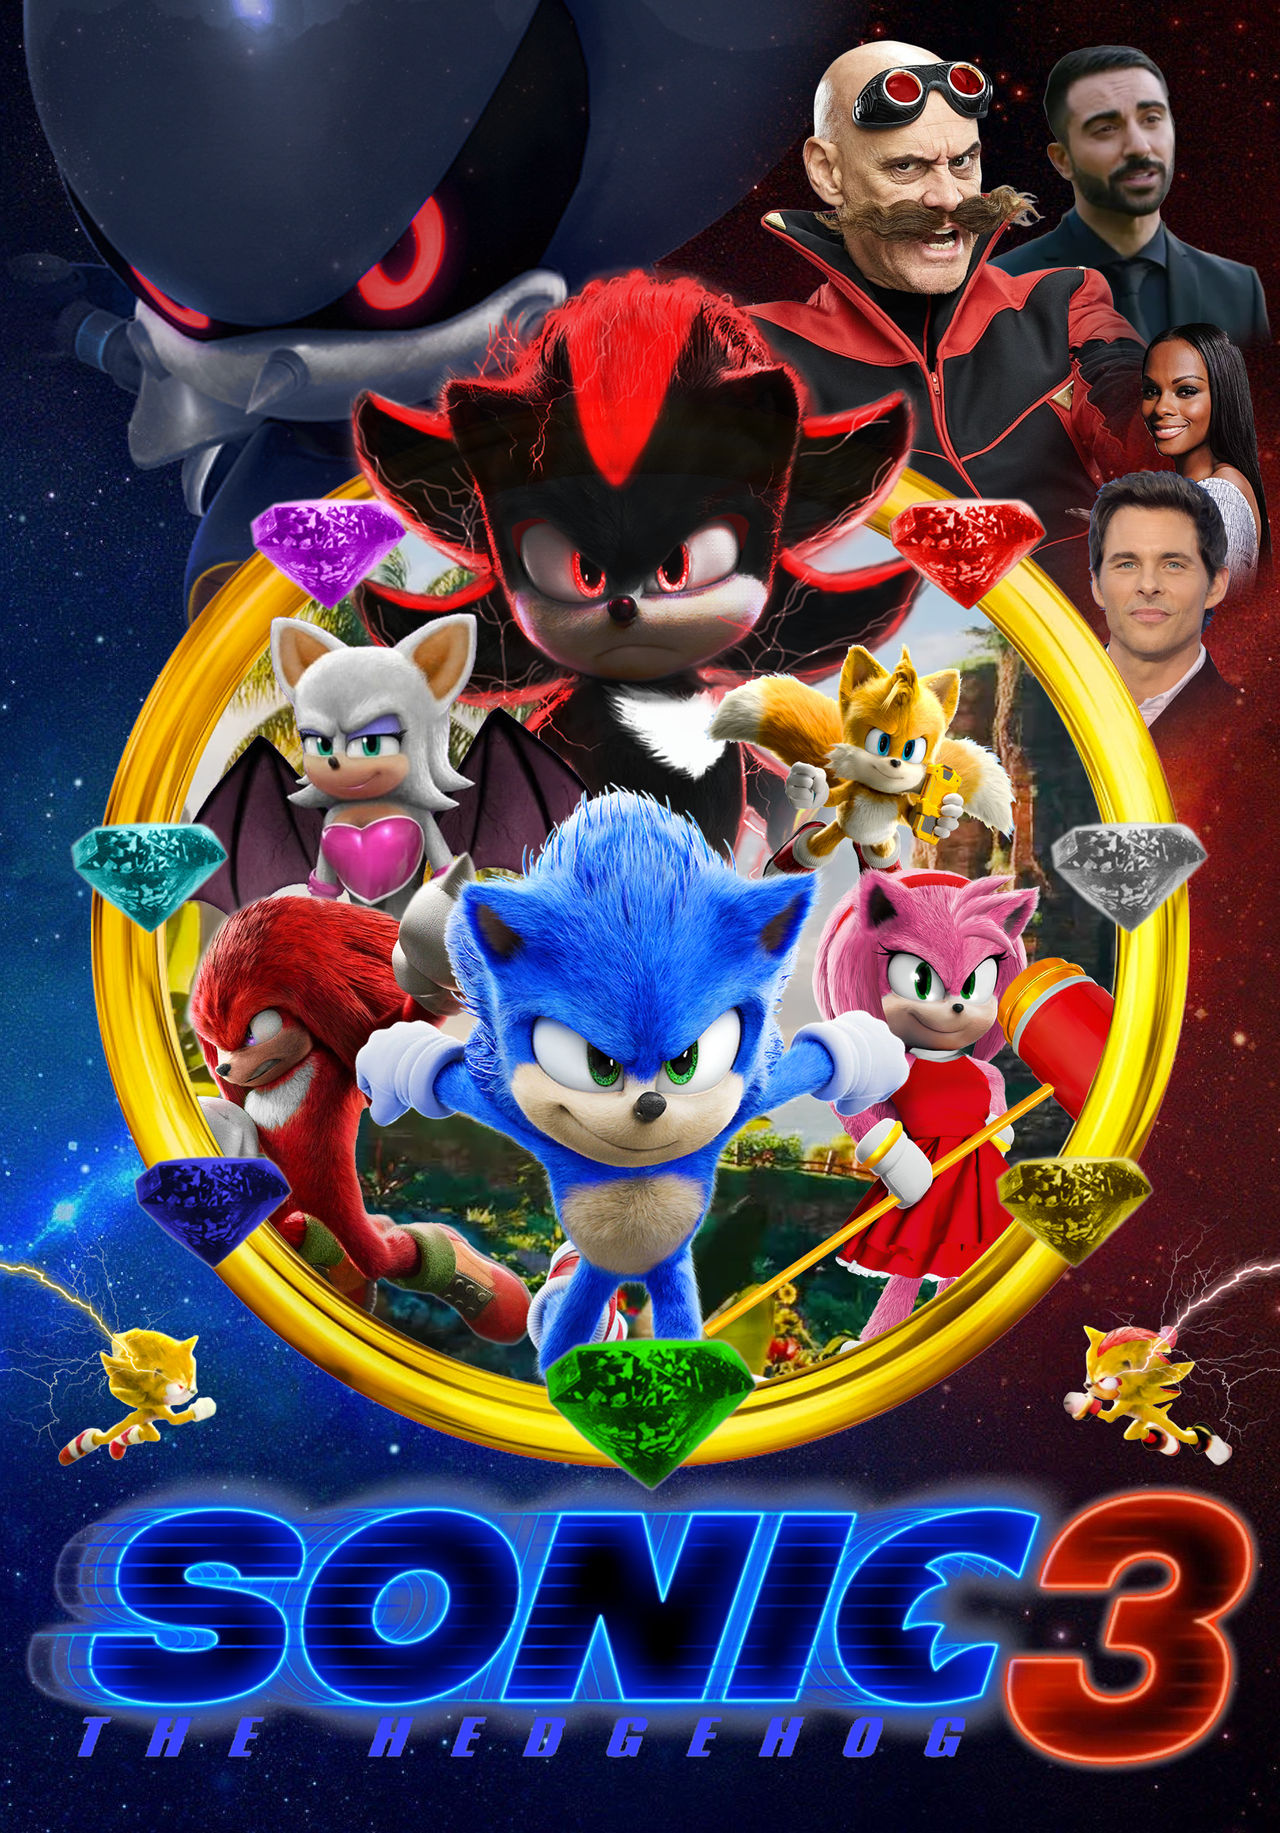 Custom Sonic Prime season 3 poster by Nikisawesom on DeviantArt